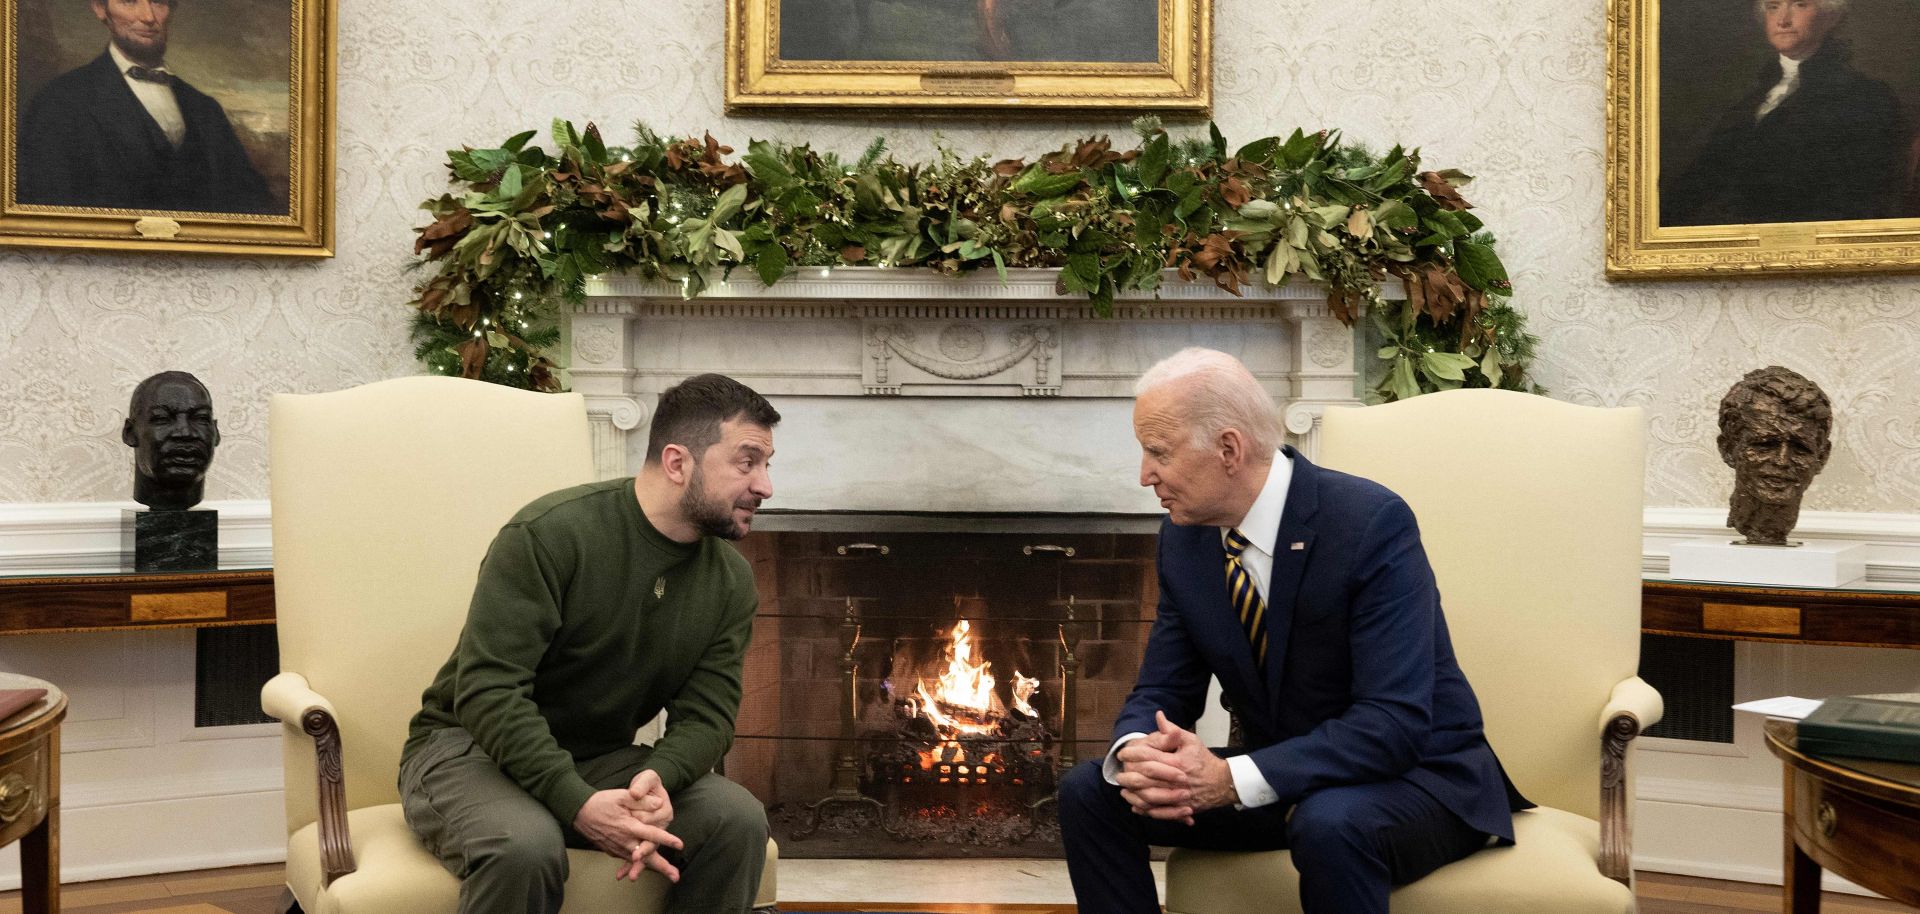 Ukrainian President Volodymyr Zelensky meets with U.S. President Joe Biden in the Oval Office of the White House, in Washington, D.C. on Dec. 21, 2022.